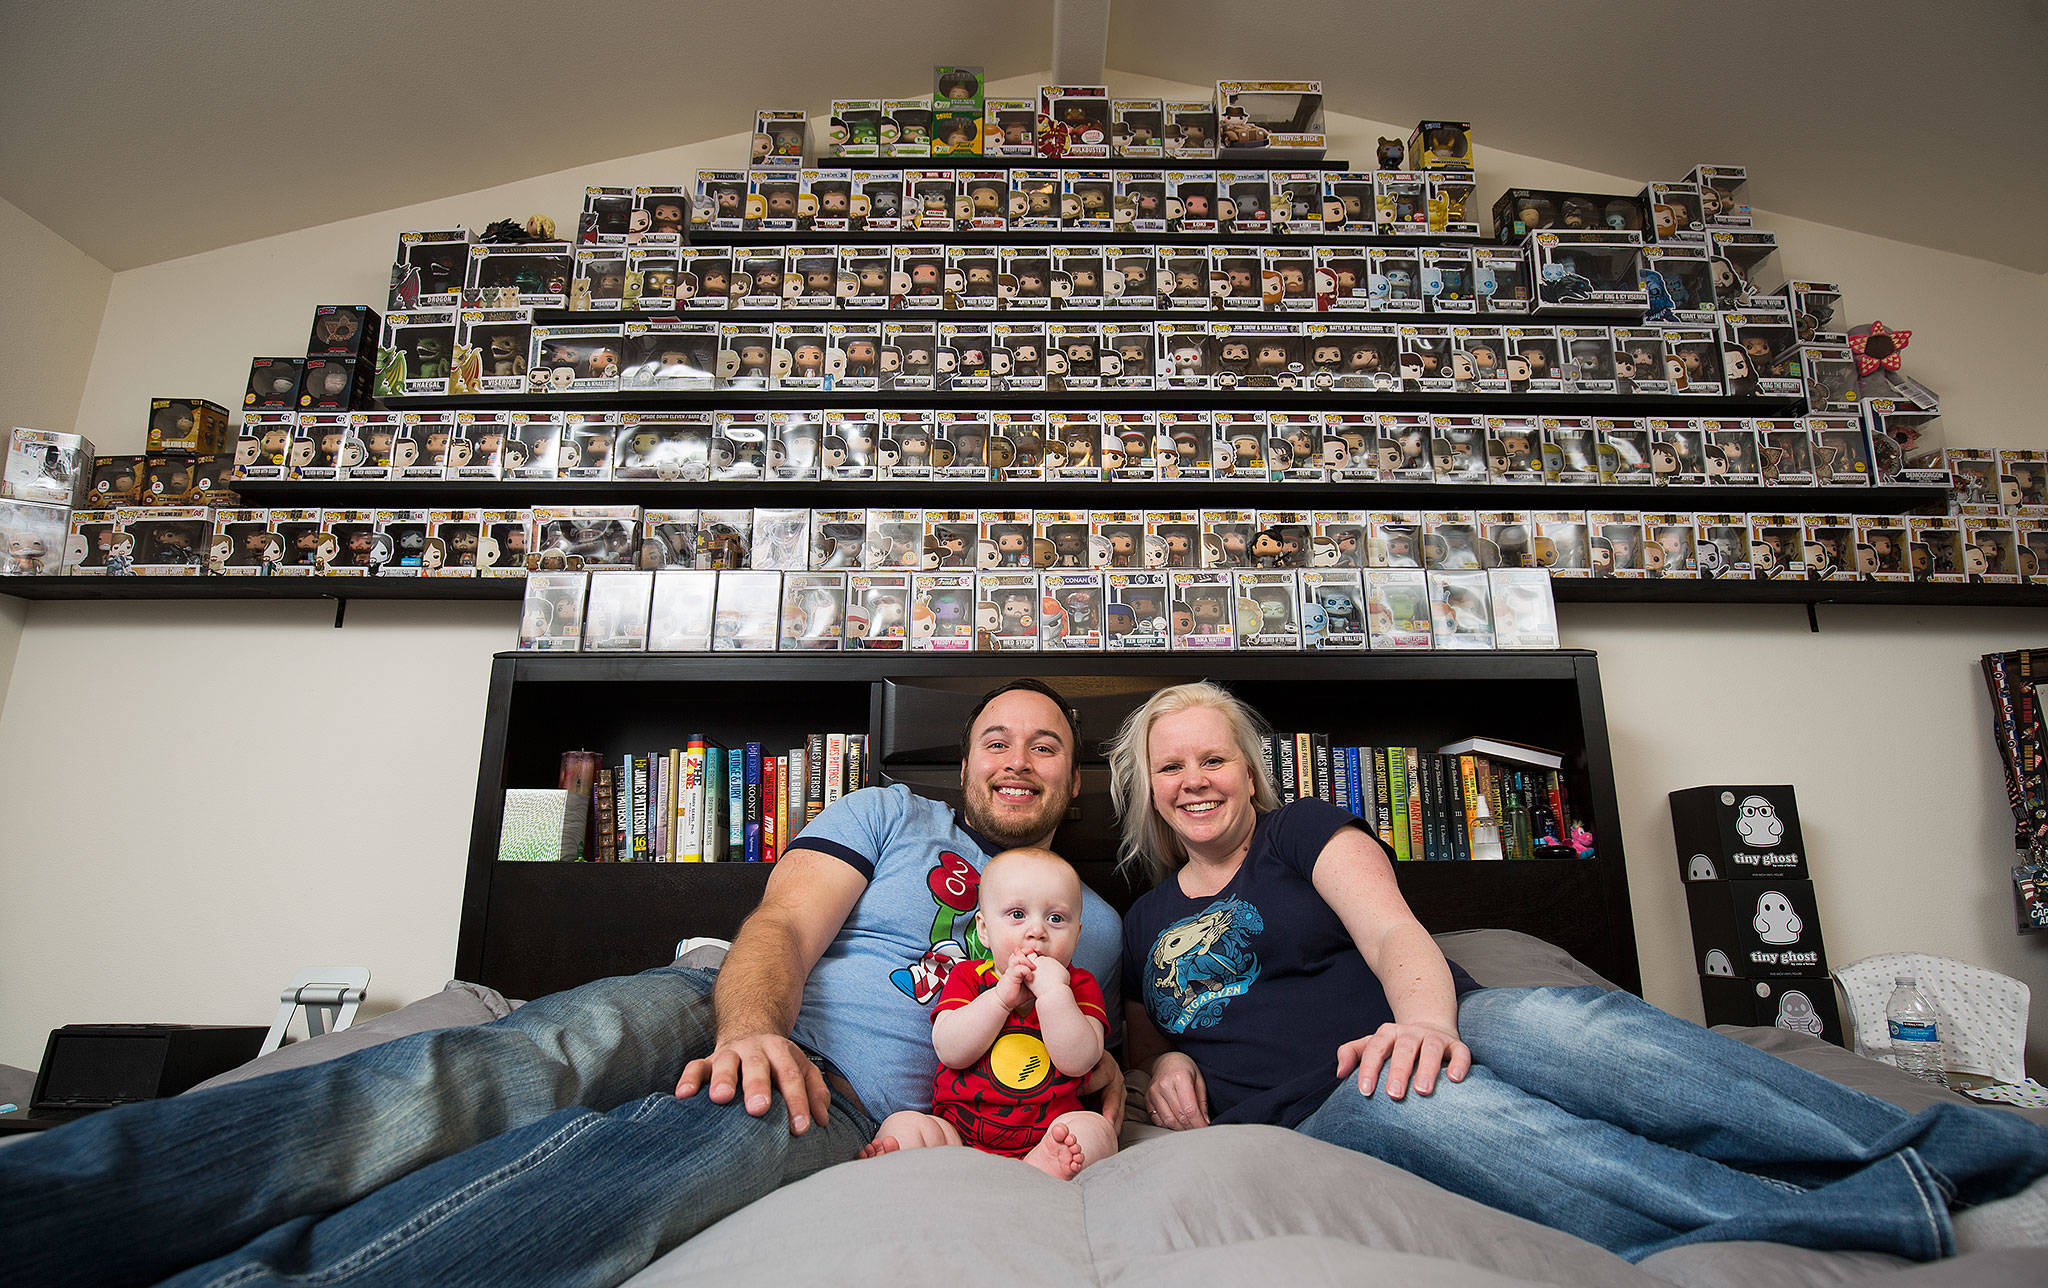 Diedre Twitty, her boyfriend Jordon Vargas and son Jensen Vargas pose user a shelf full of Funko dolls. (Andy Bronson / The Herald)